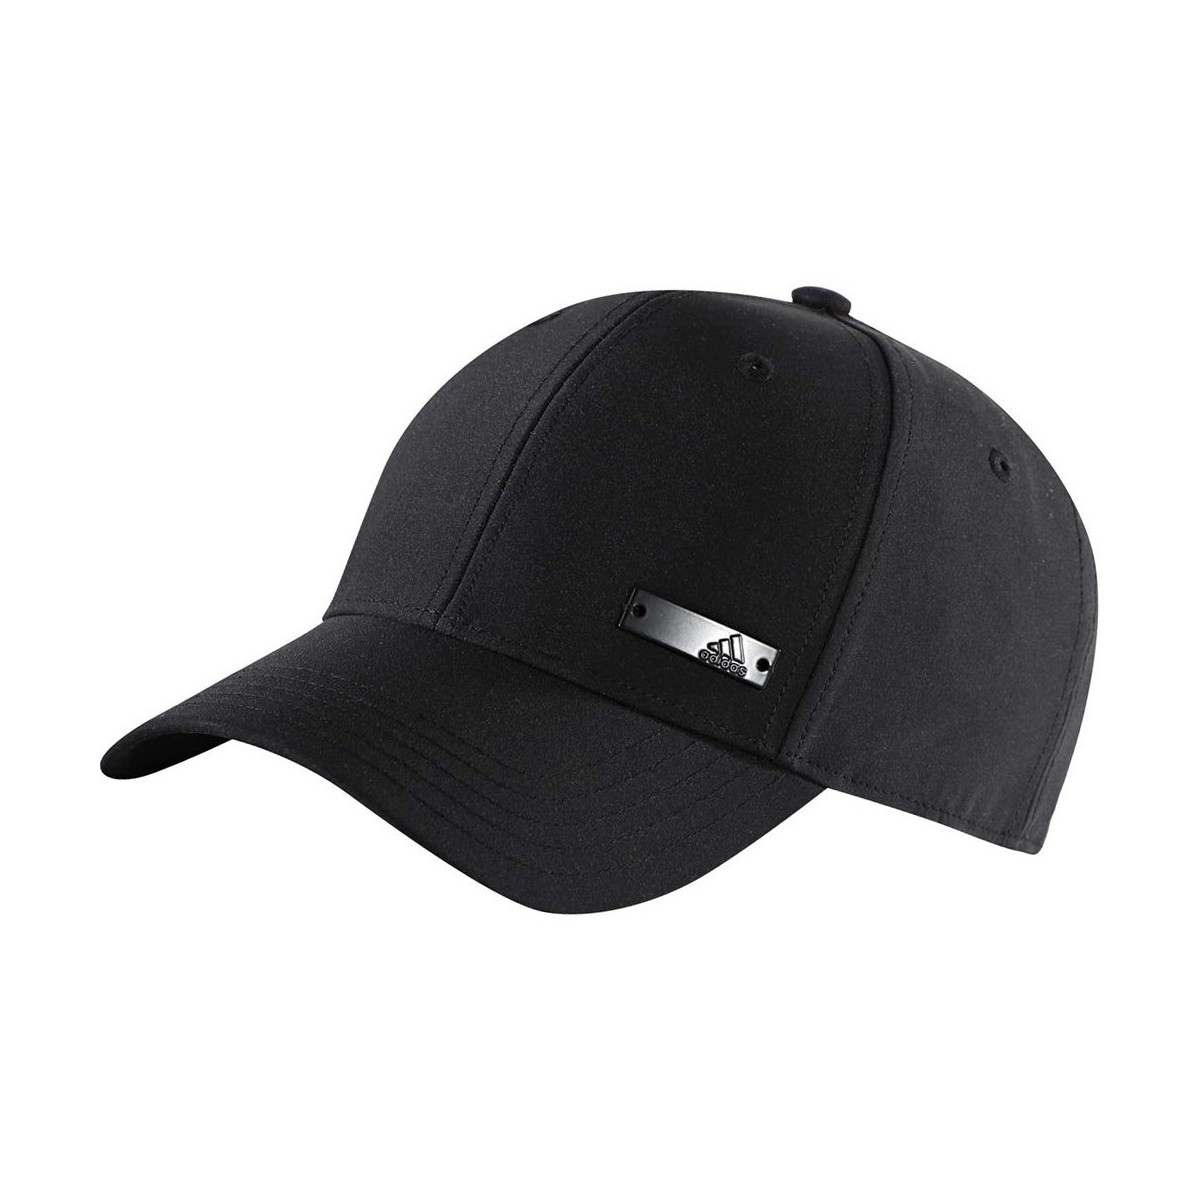 Textilní doplňky Kšiltovky adidas Originals Lightweight Metal Badge Baseball Cap Černá